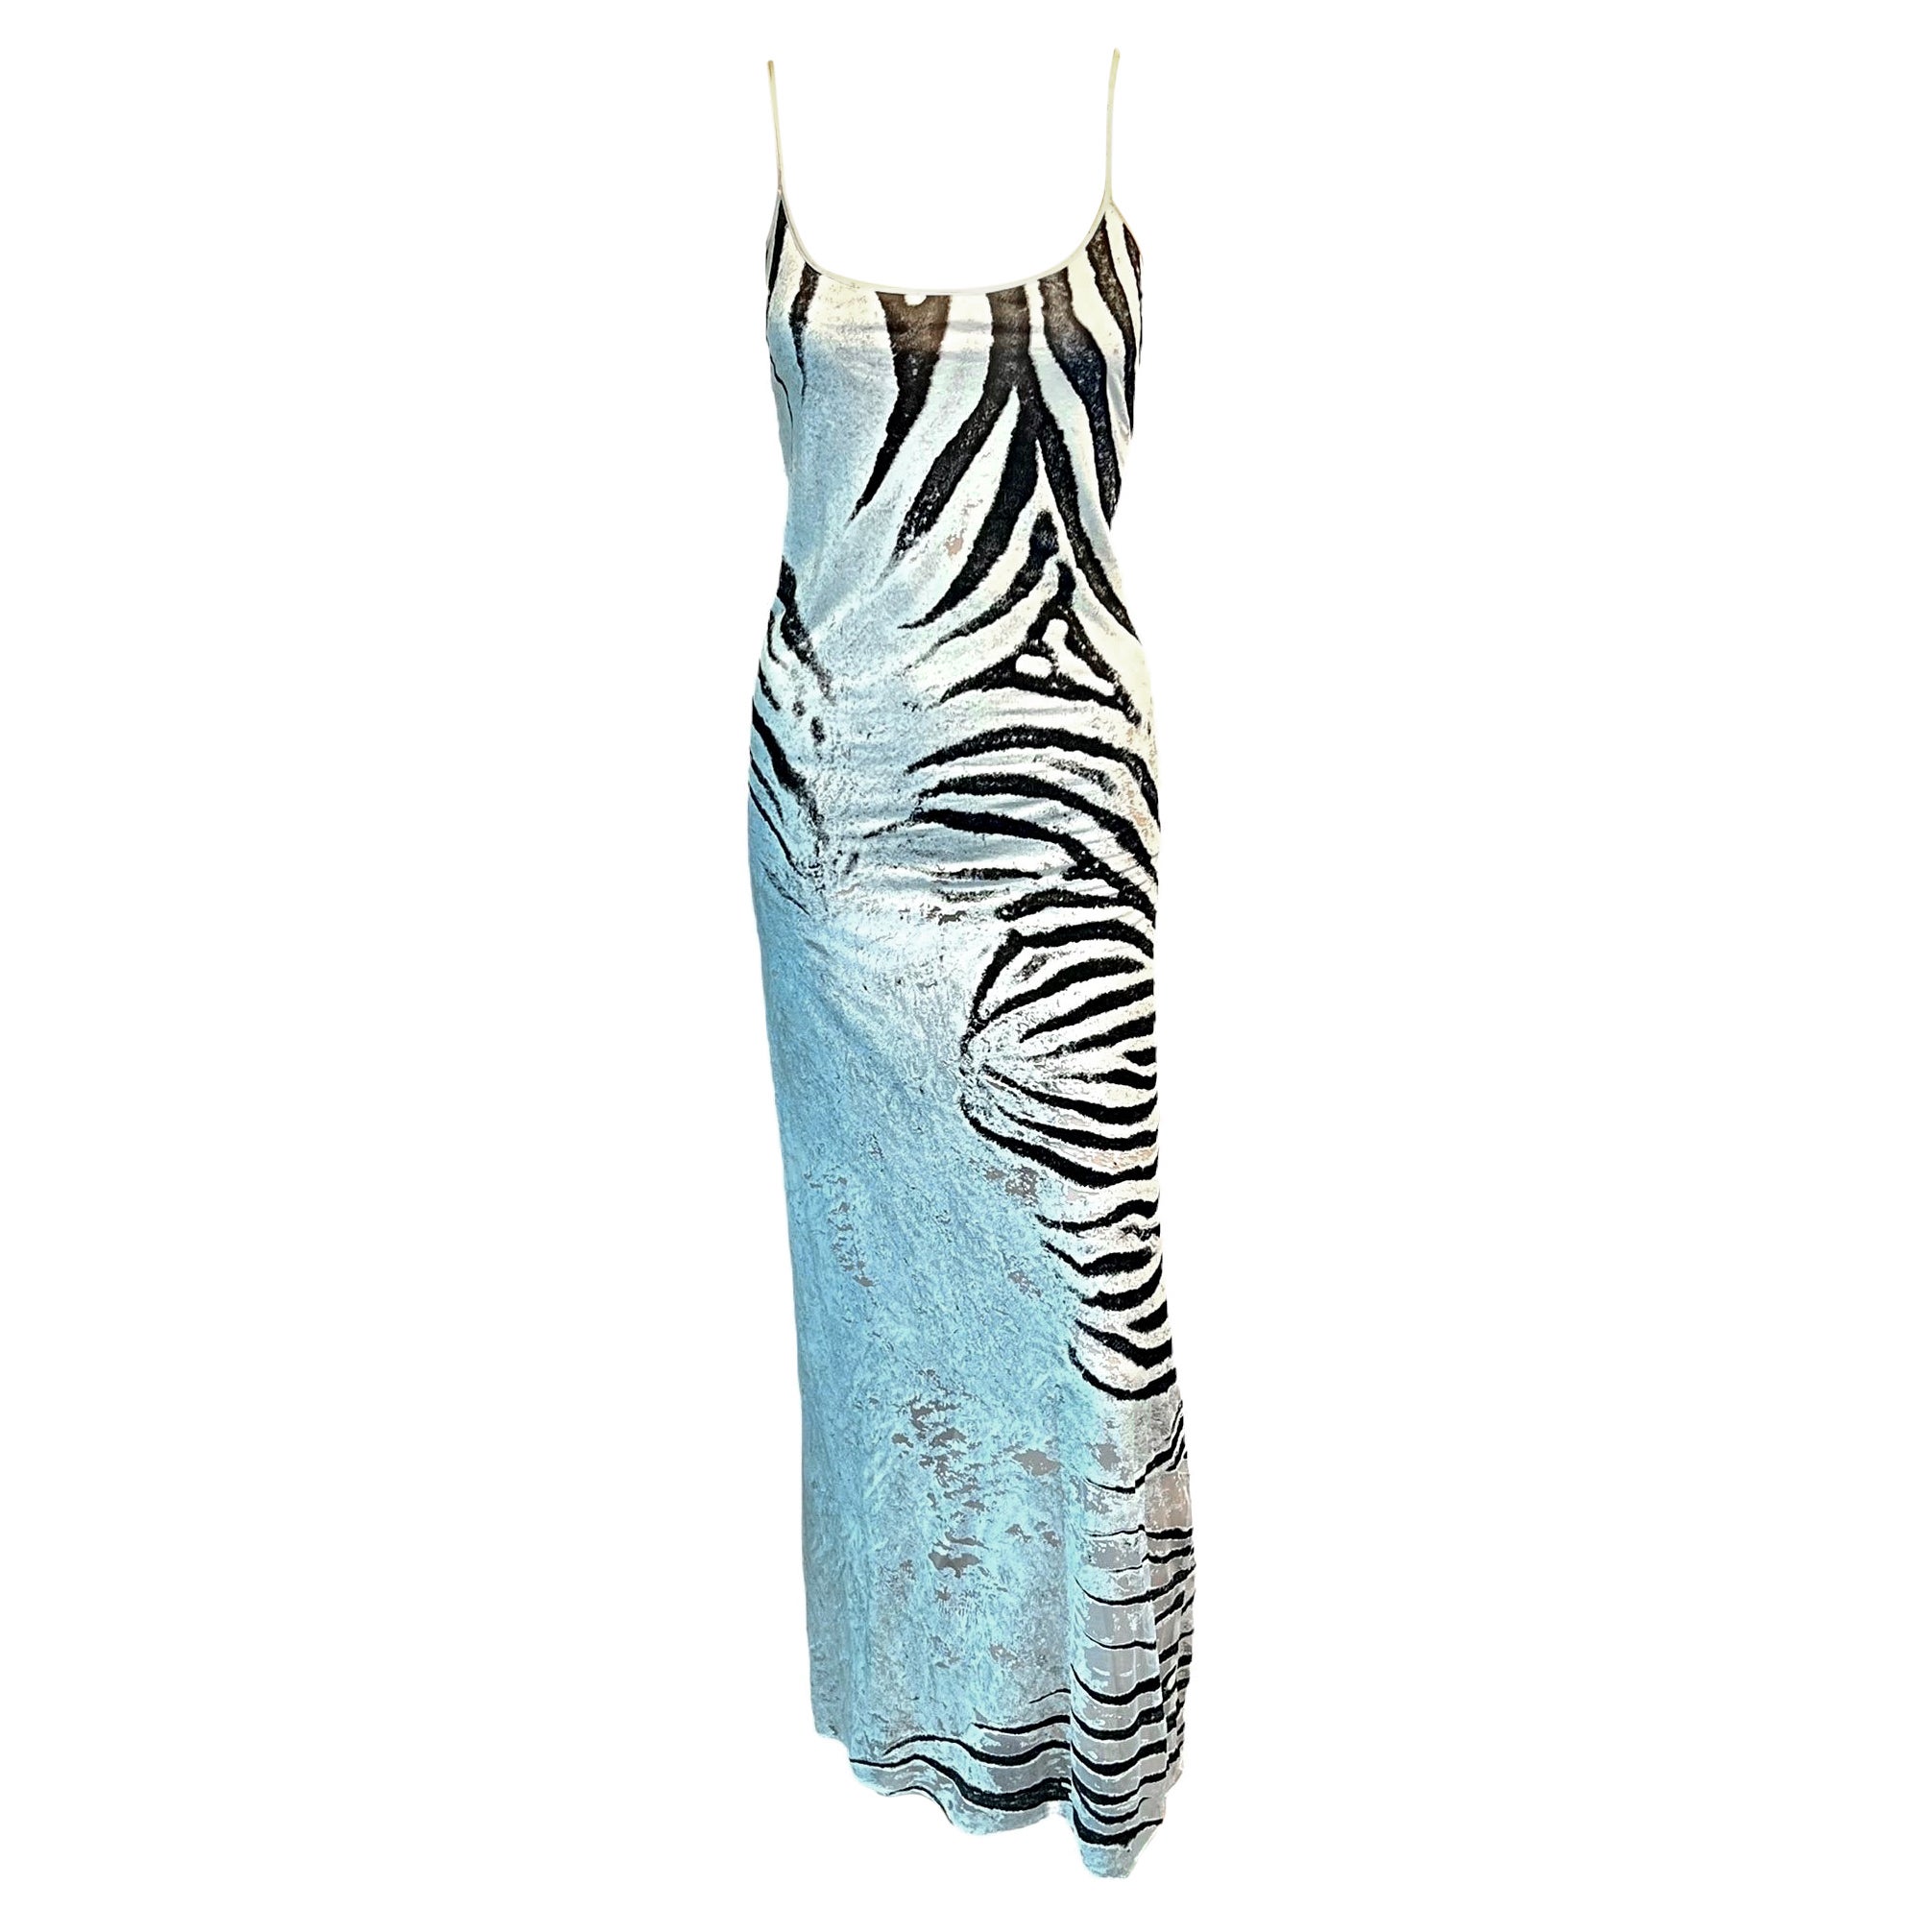 Roberto Cavalli S/S 1999 Runway Sheer Mesh Zebra Print Slip Evening Dress Gown